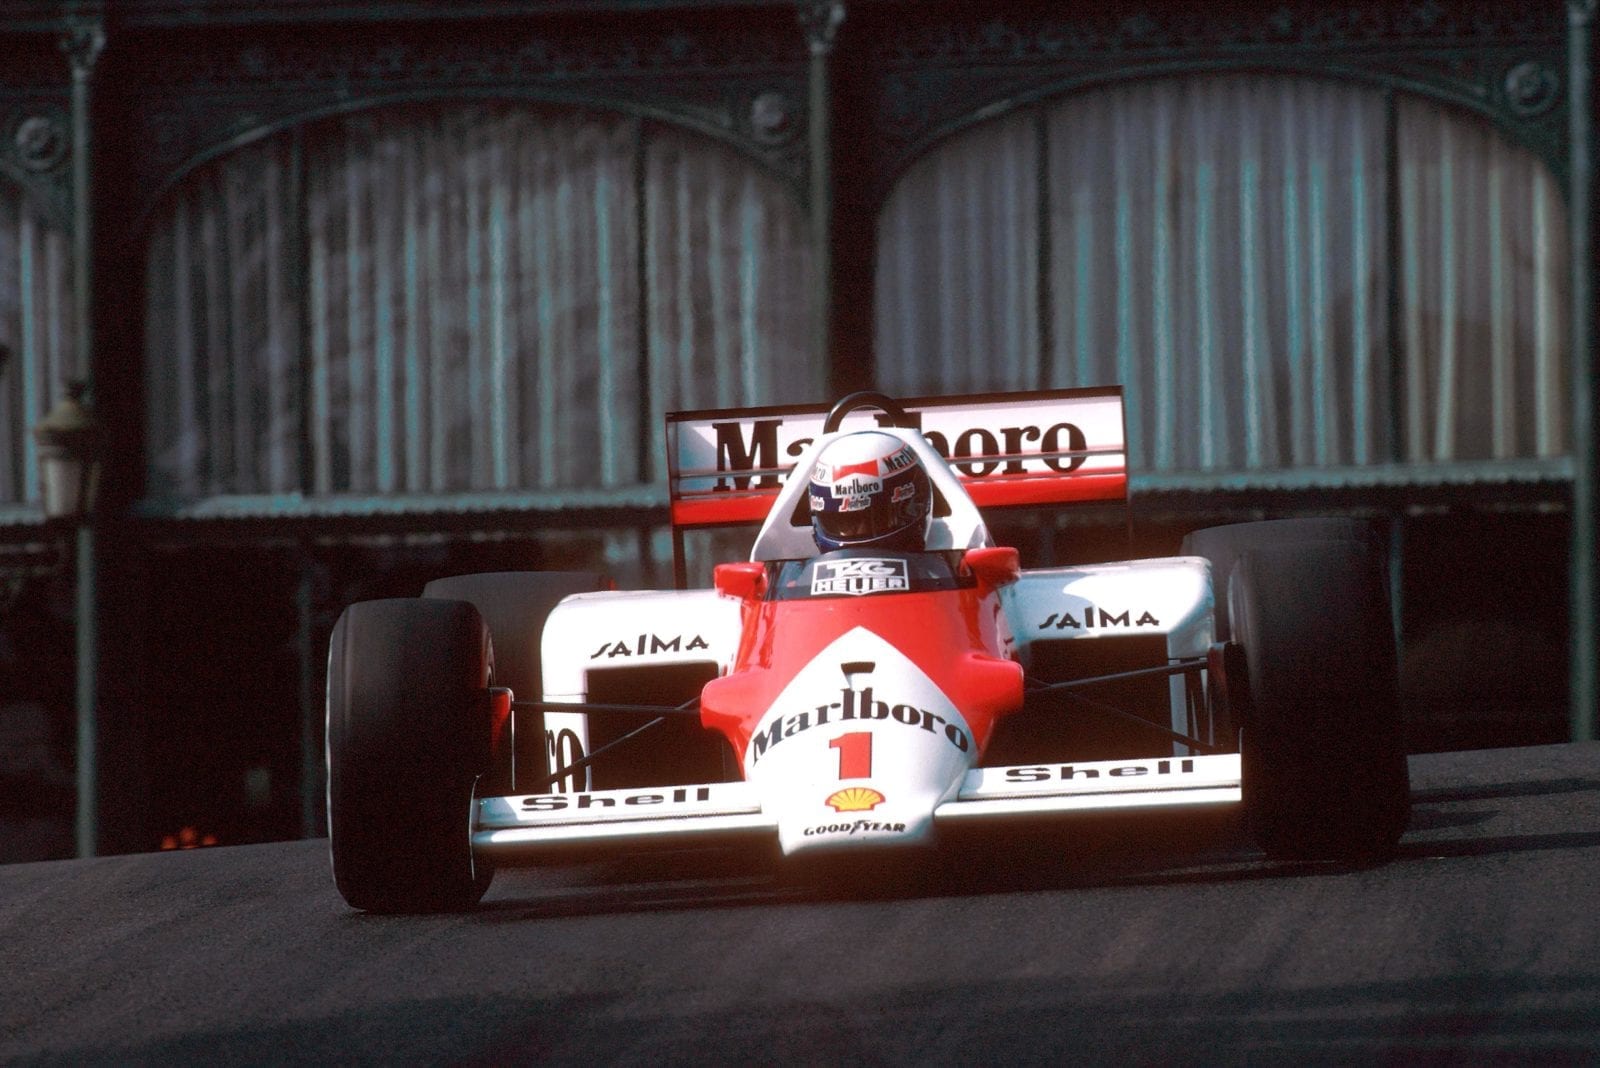 McLaren's Alain Prost took his third consecutive Monaco win